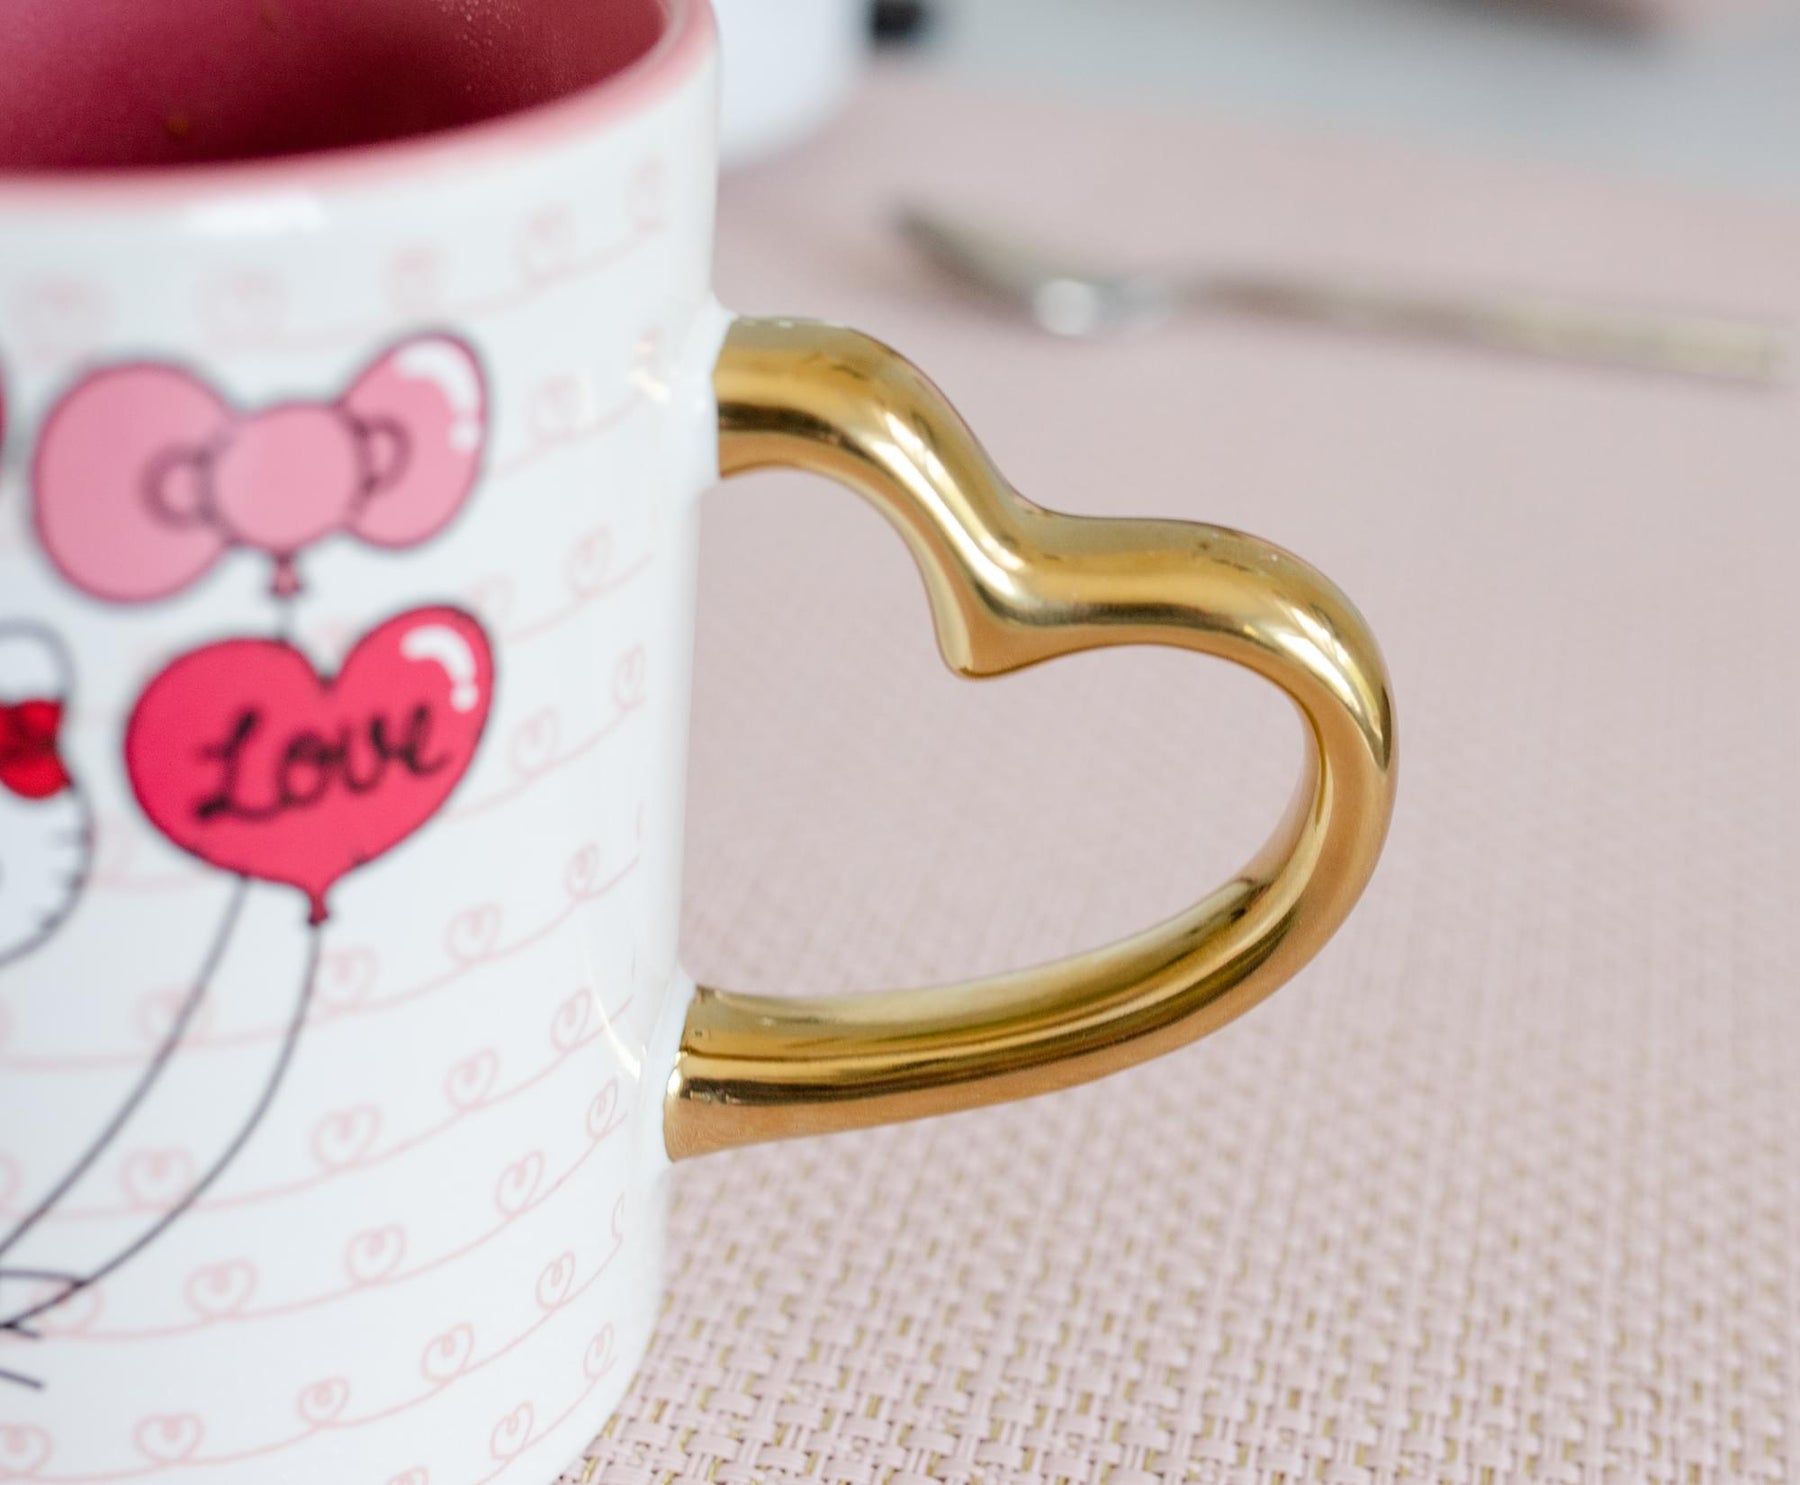 Sanrio Hello Kitty Love Heart-Shaped Handle Ceramic Mug | Holds 14 Ounces